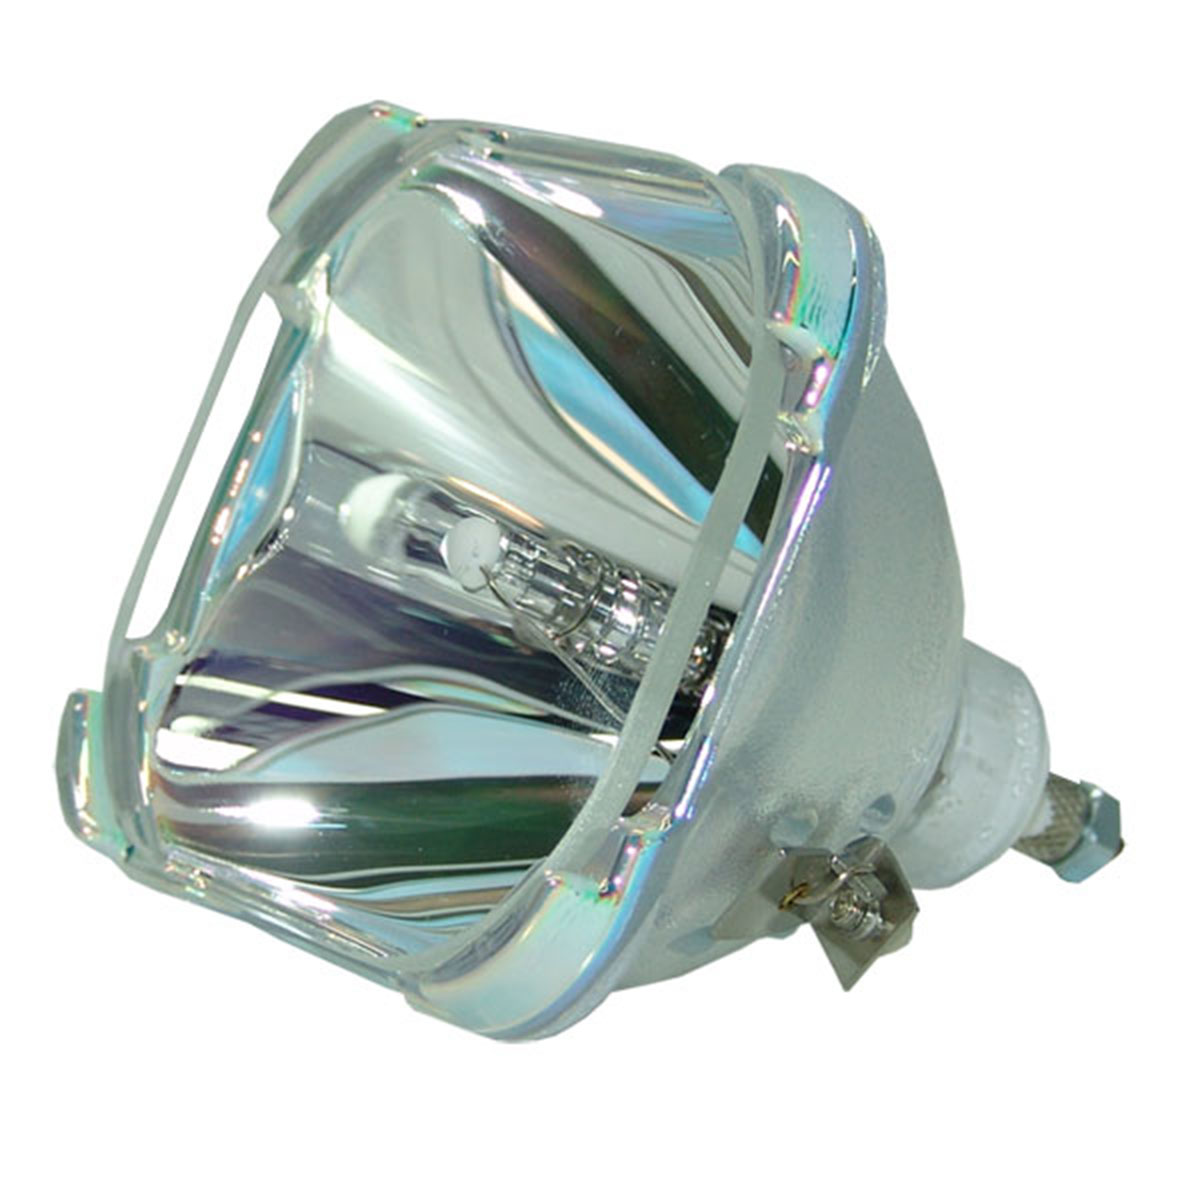 Epson ELPLP13 Lamp for sale online 